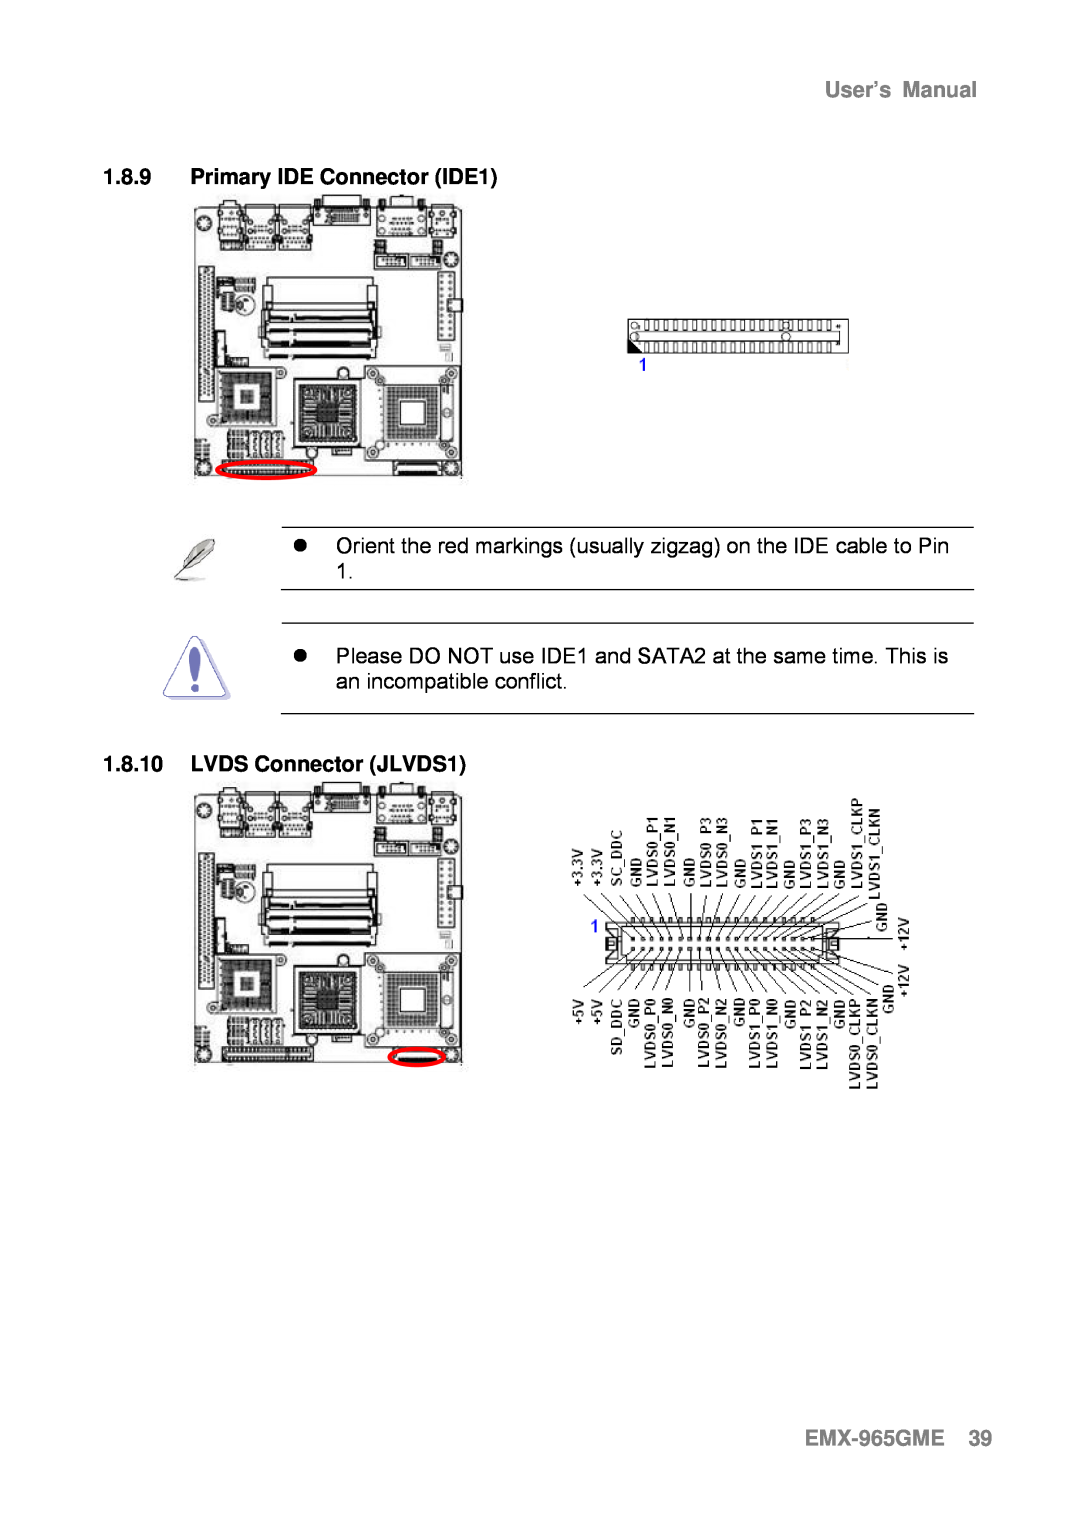 Intel user manual 1.8.9Primary IDE Connector IDE1, 1.8.10LVDS Connector JLVDS1, EMX-965GME39, User’s Manual 